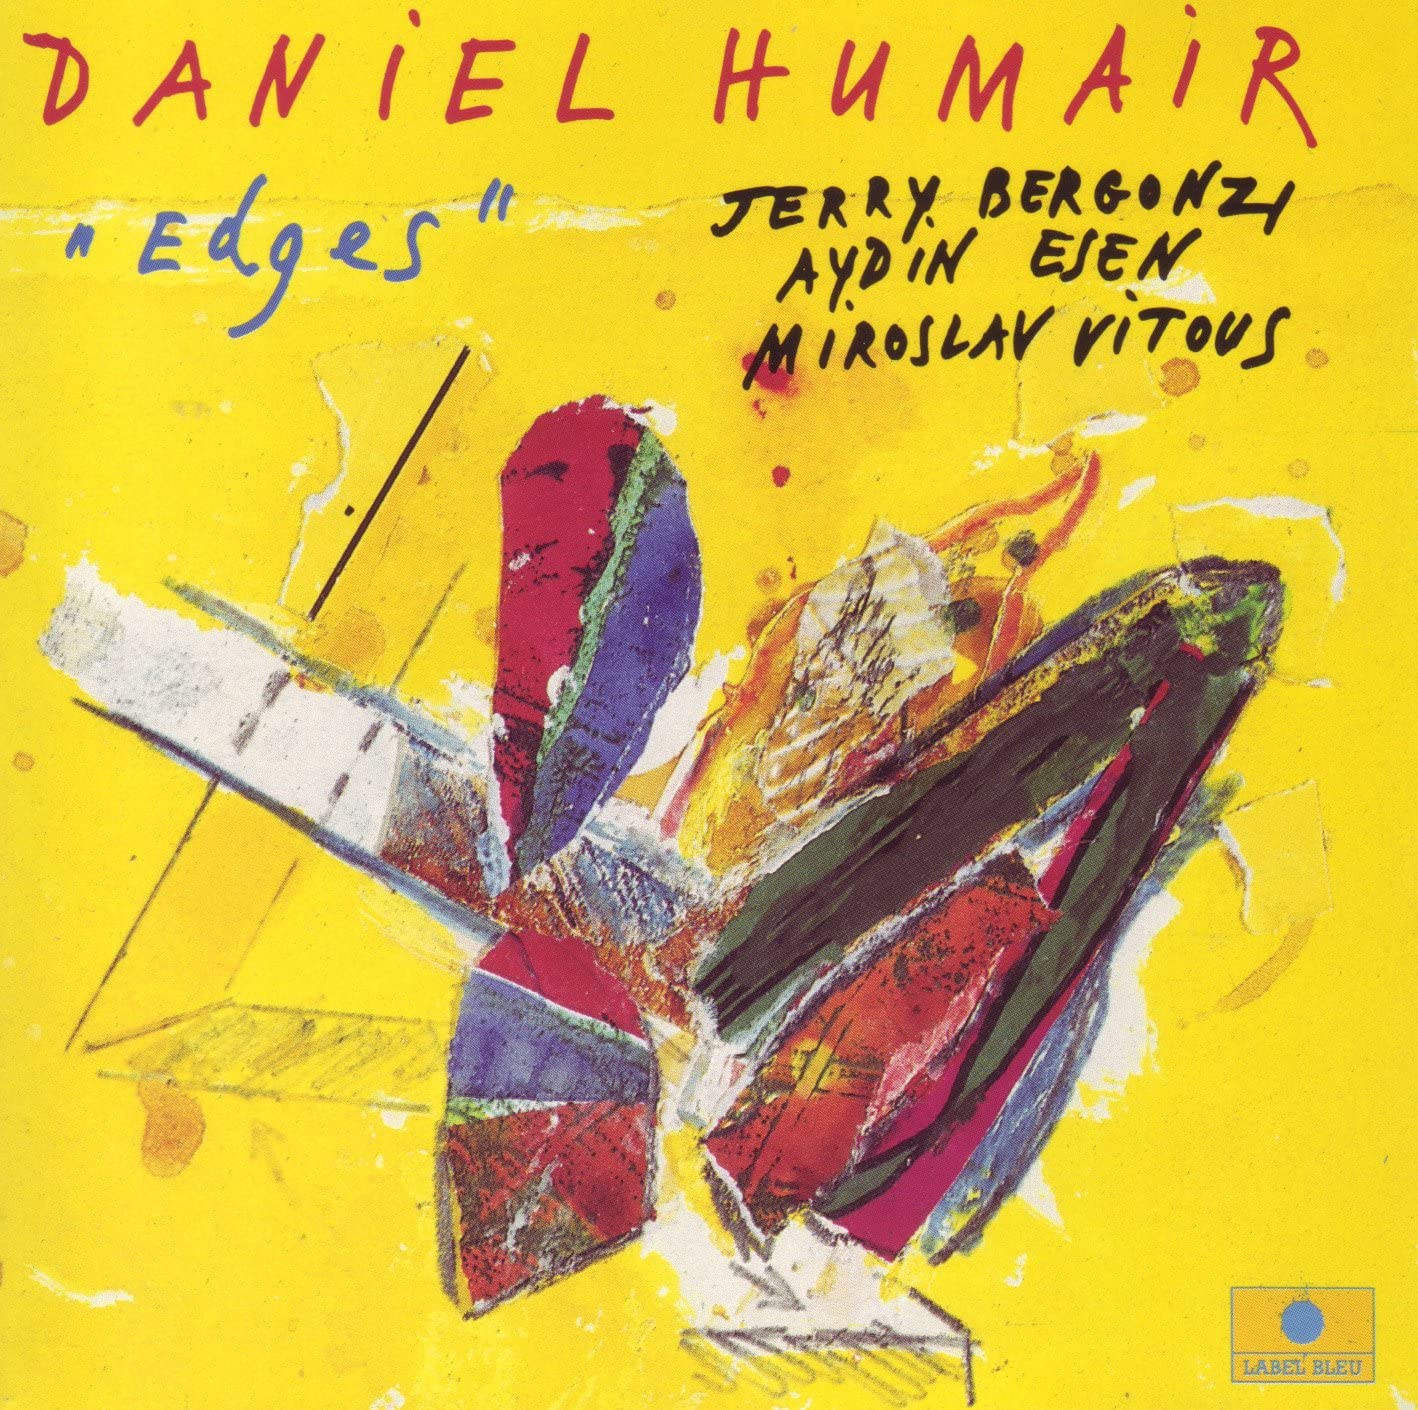 Daniel Humair: "Edges"